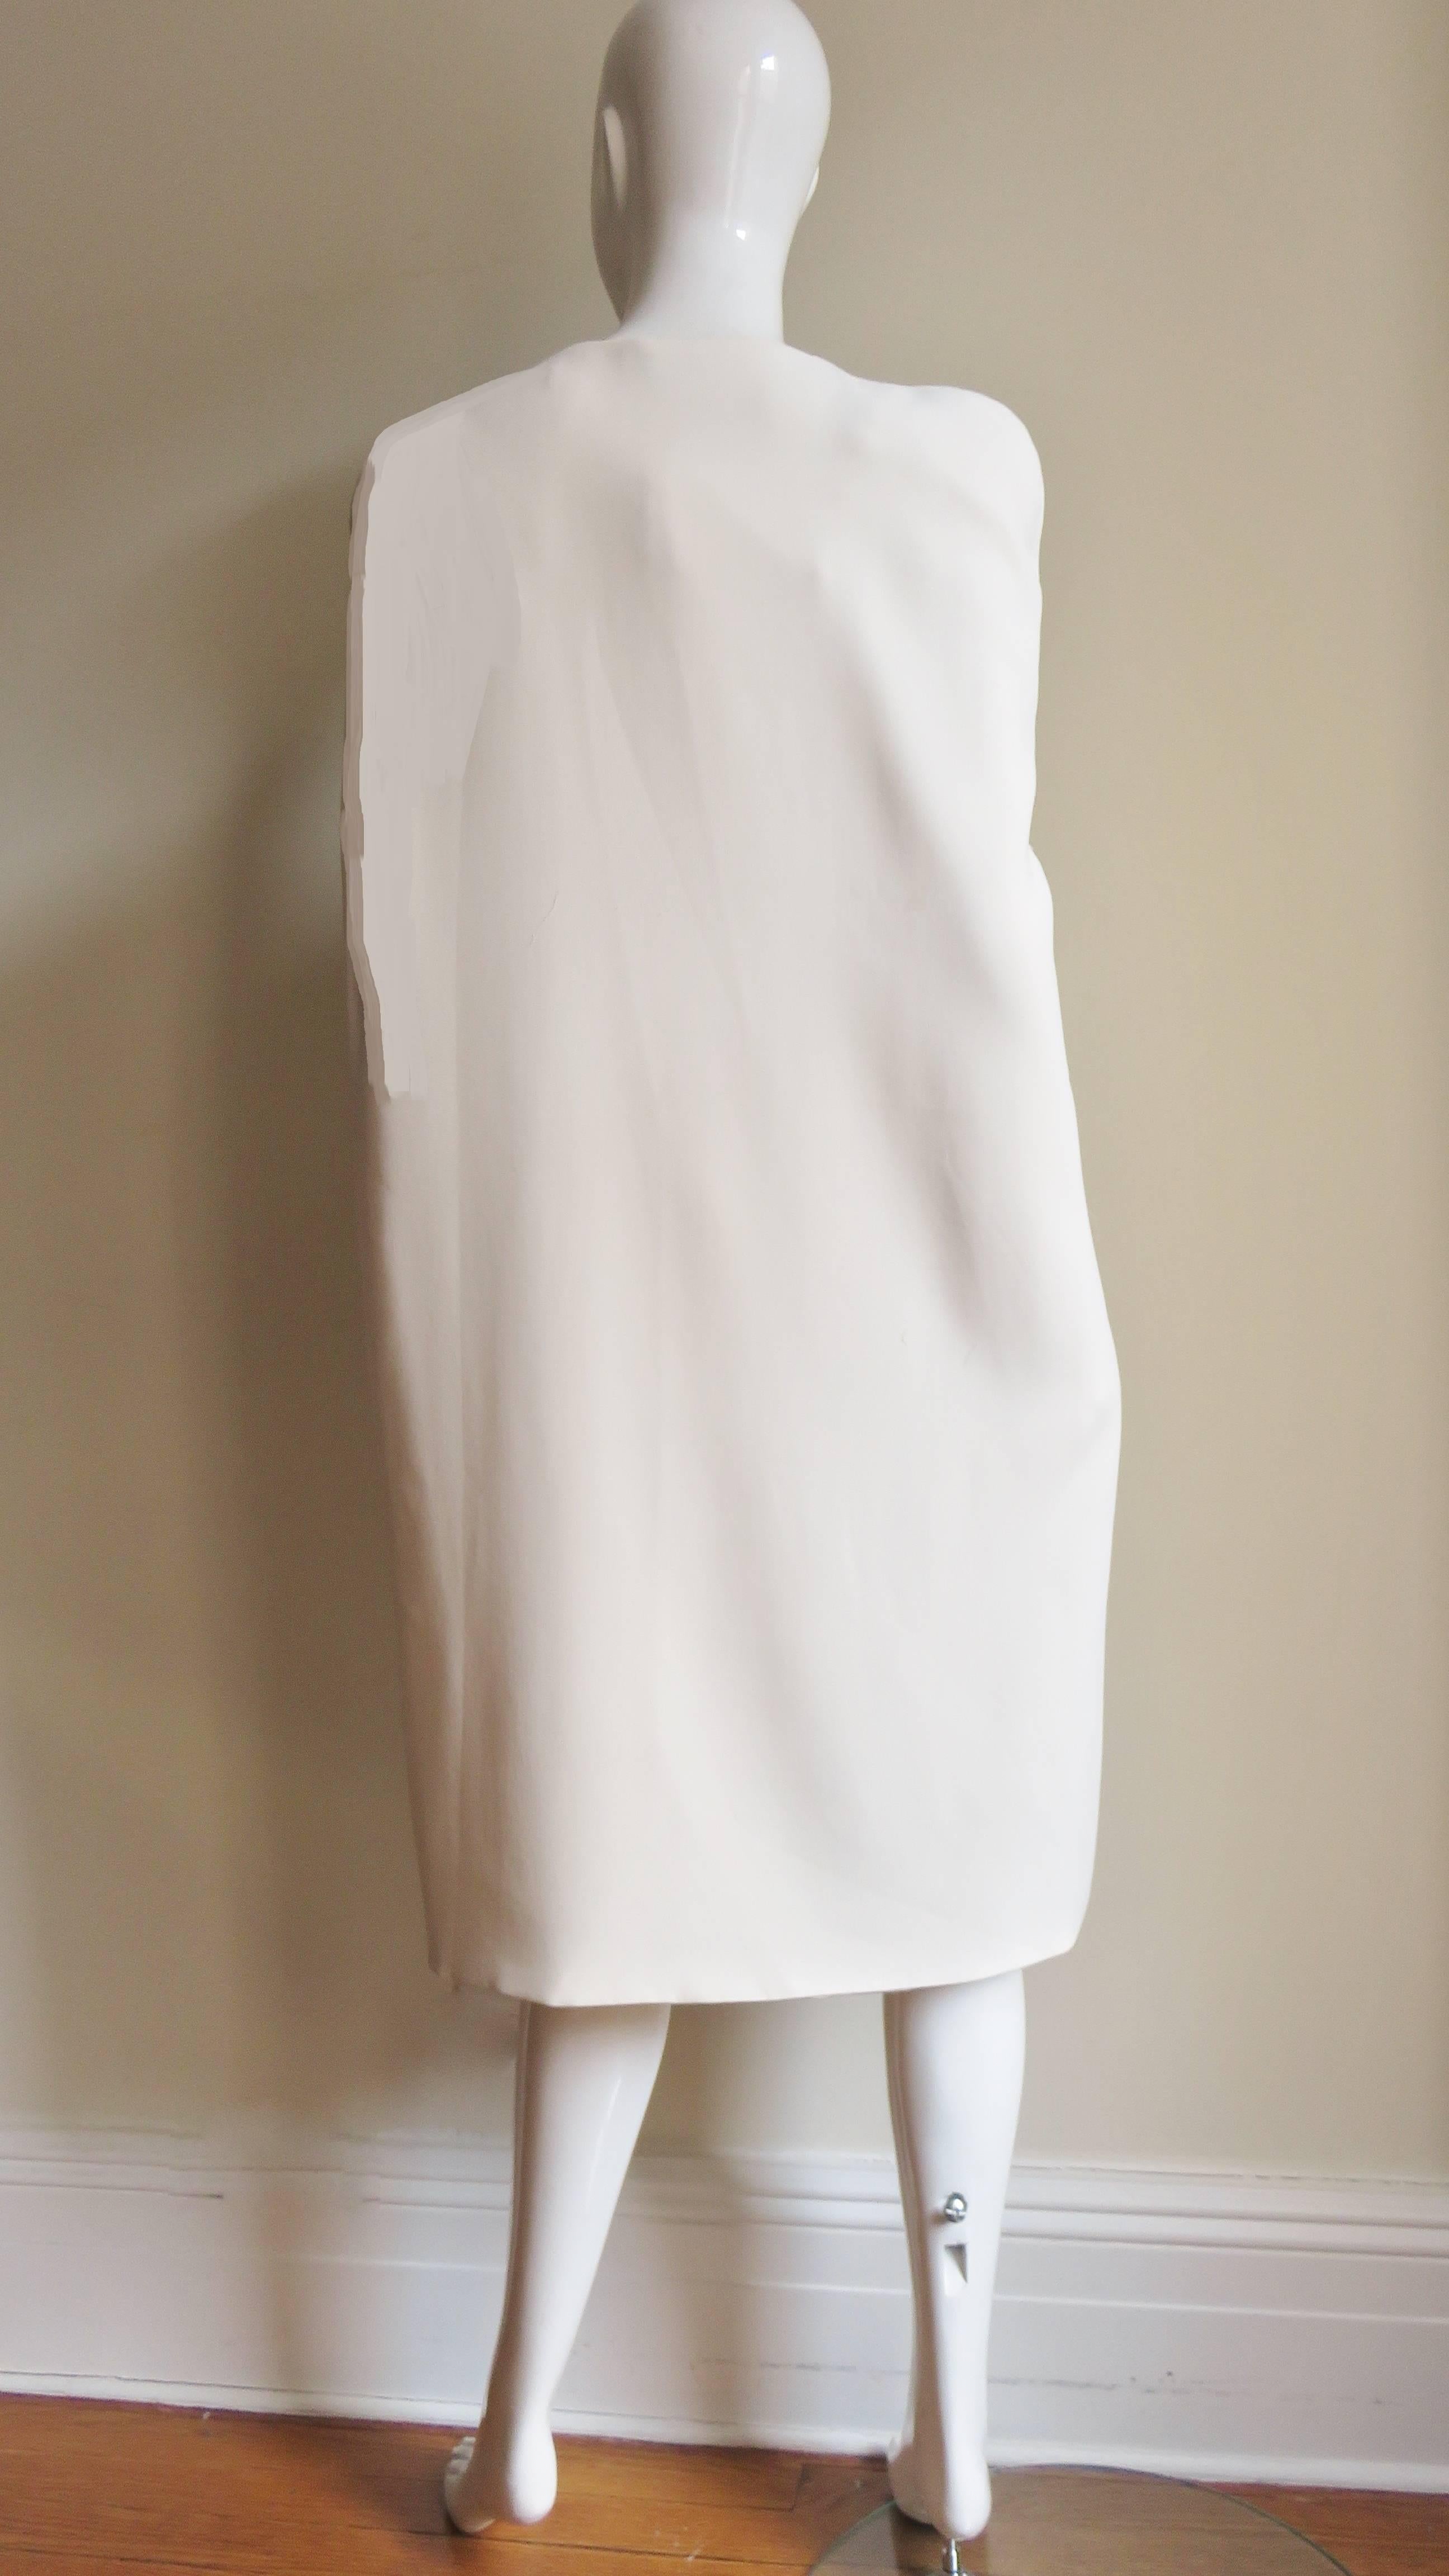 Iconic Tom Ford Academy Award Gwyneth Paltrow New Dress & Cape  2